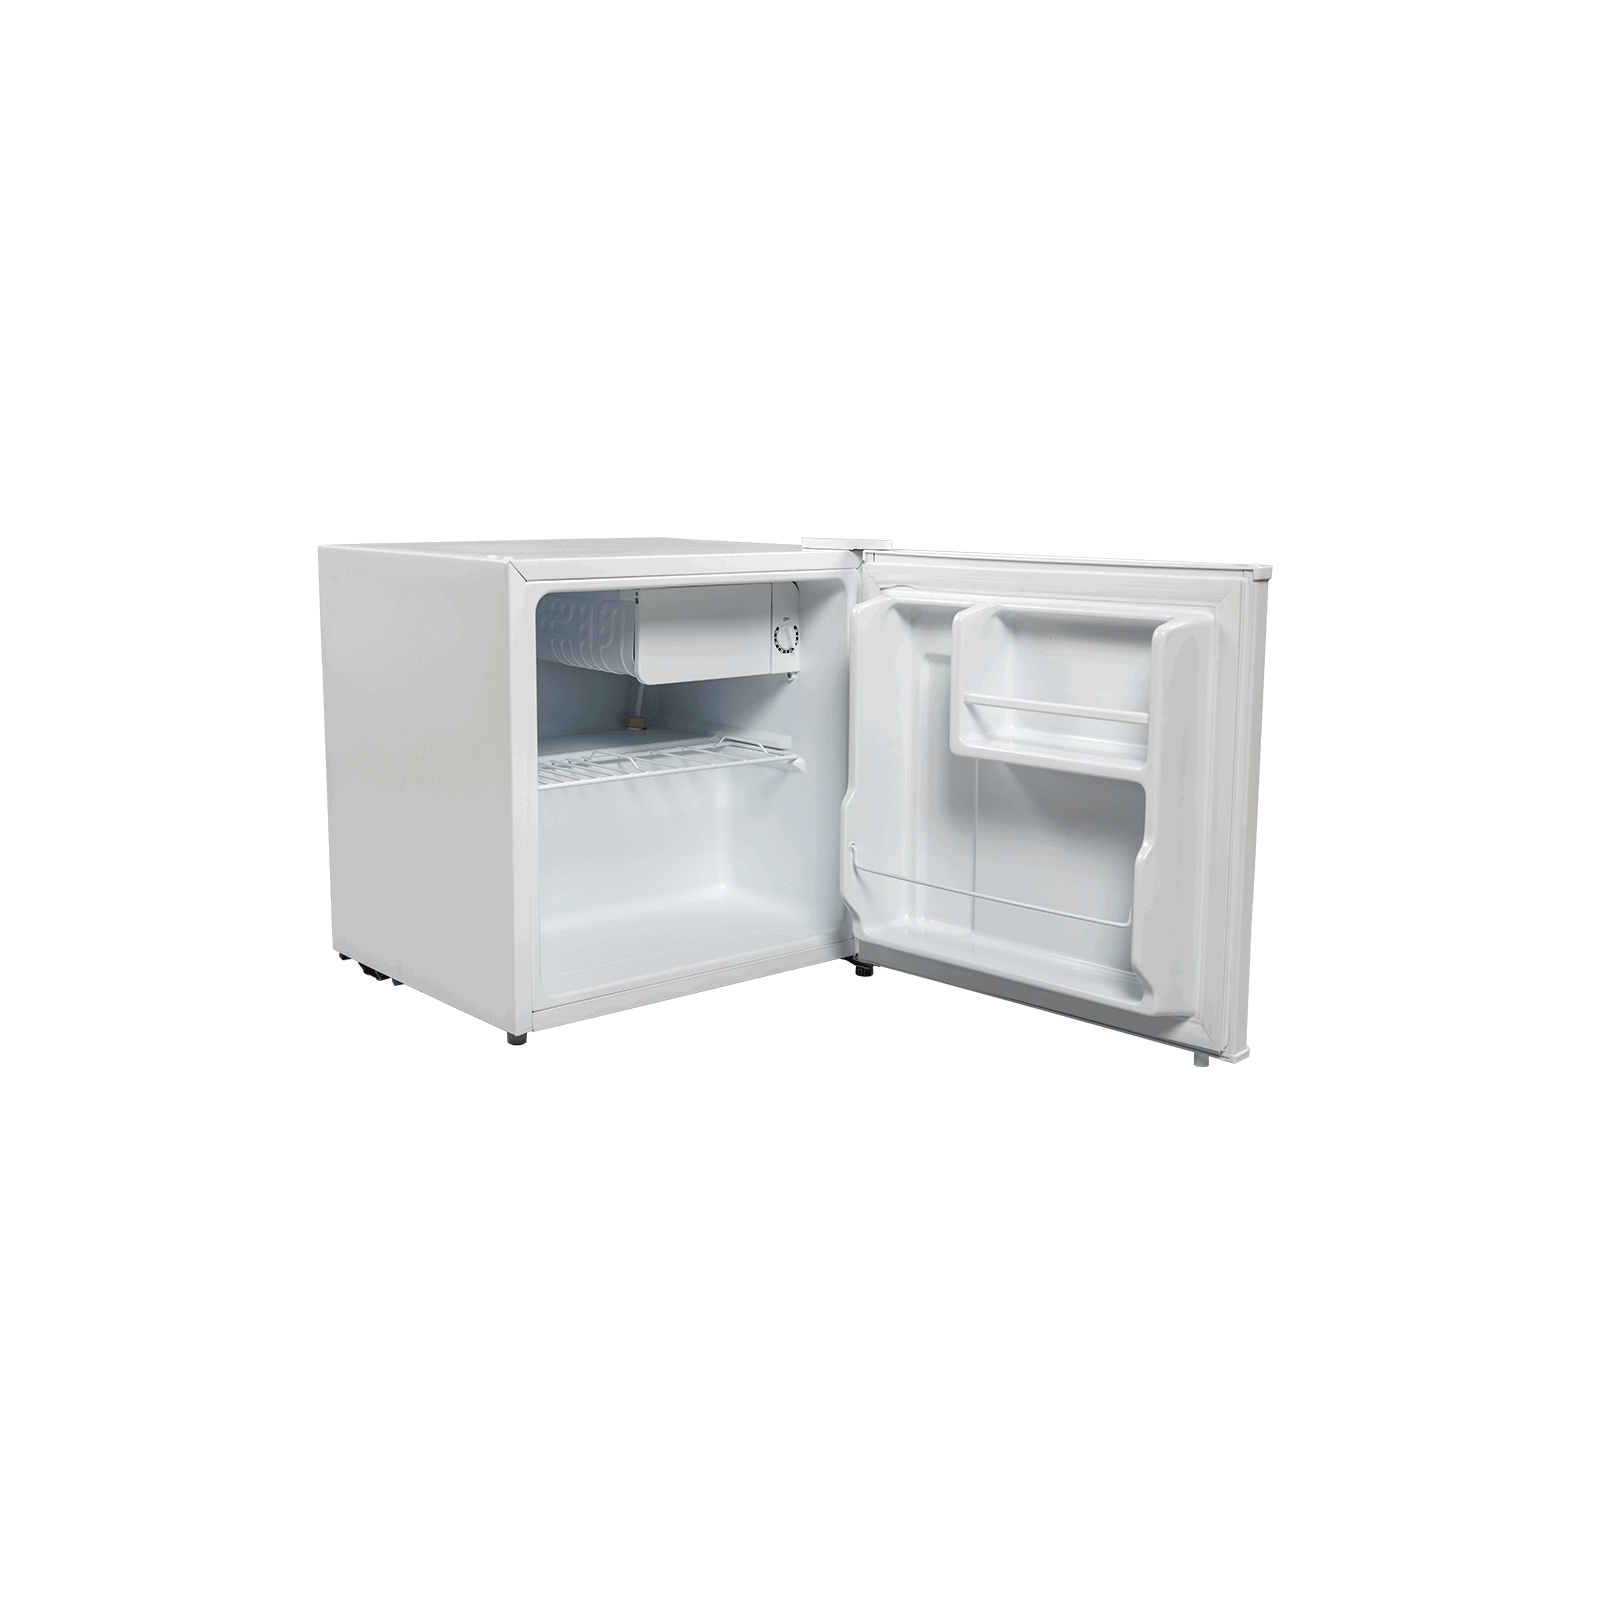 Холодильник Grunhelm VRH-S51M44-W изображение 2